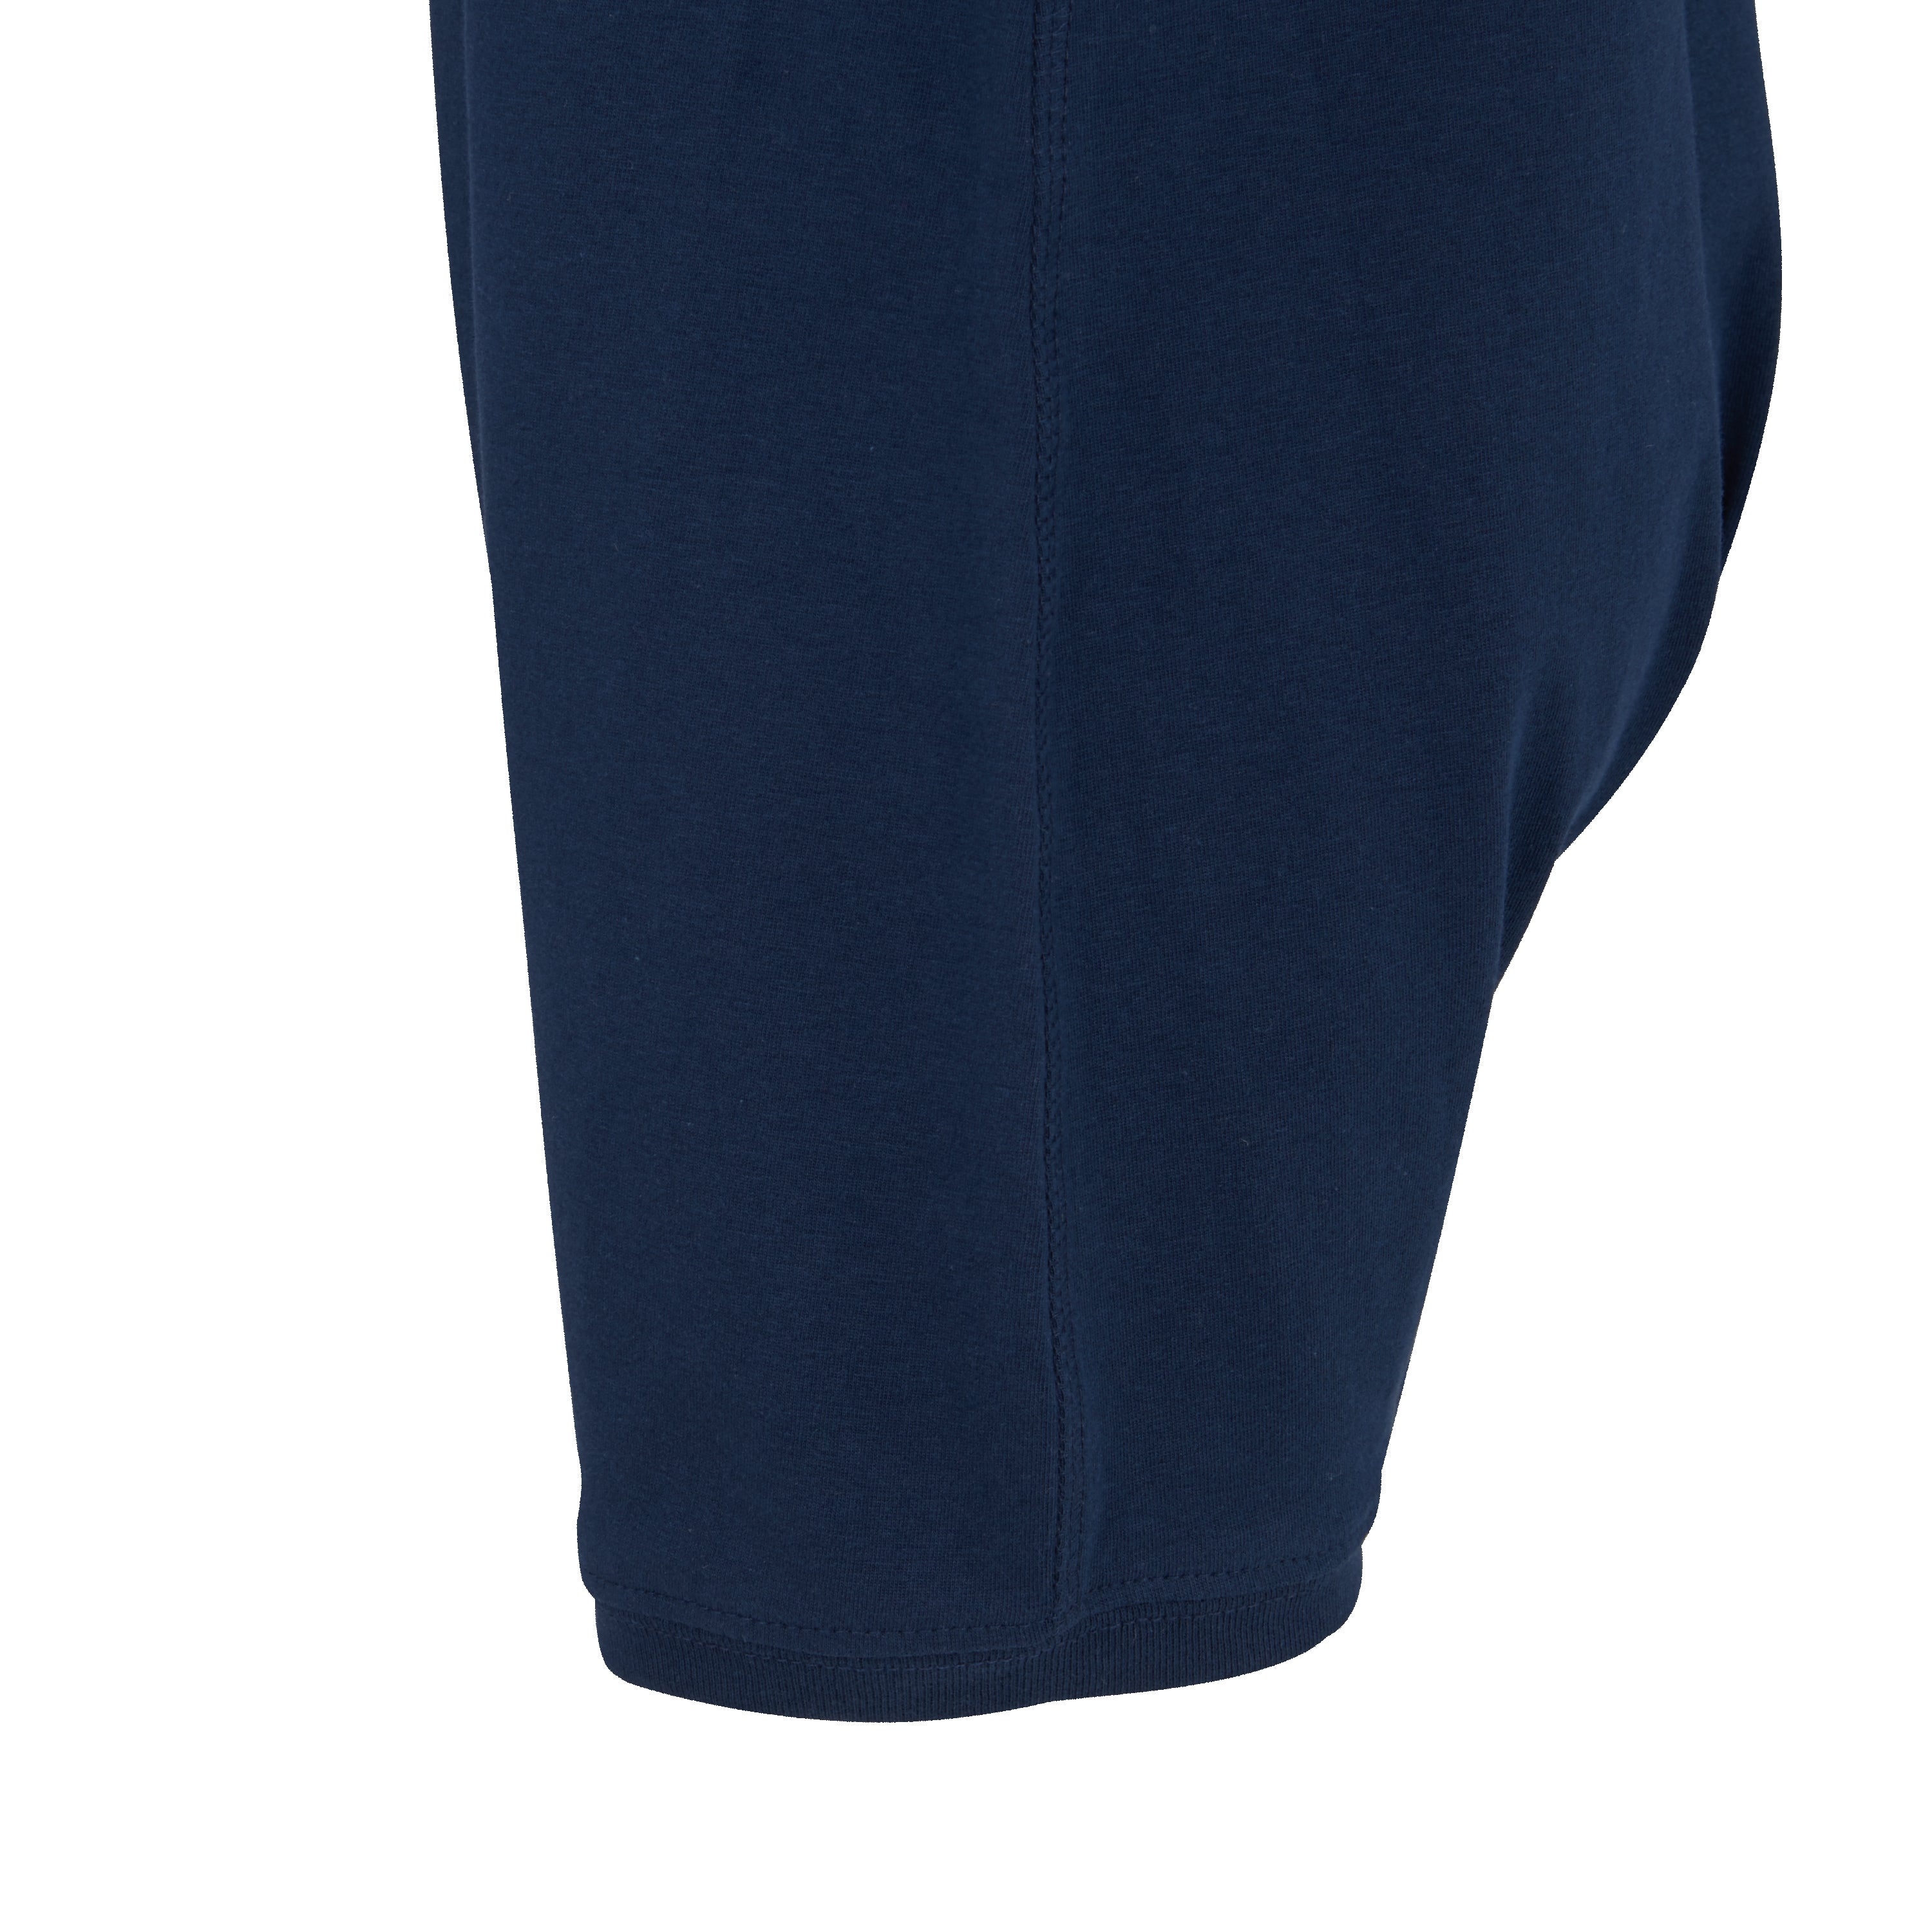 KayCey®P Super Soft Bodysuits - Sleeveless - Adults